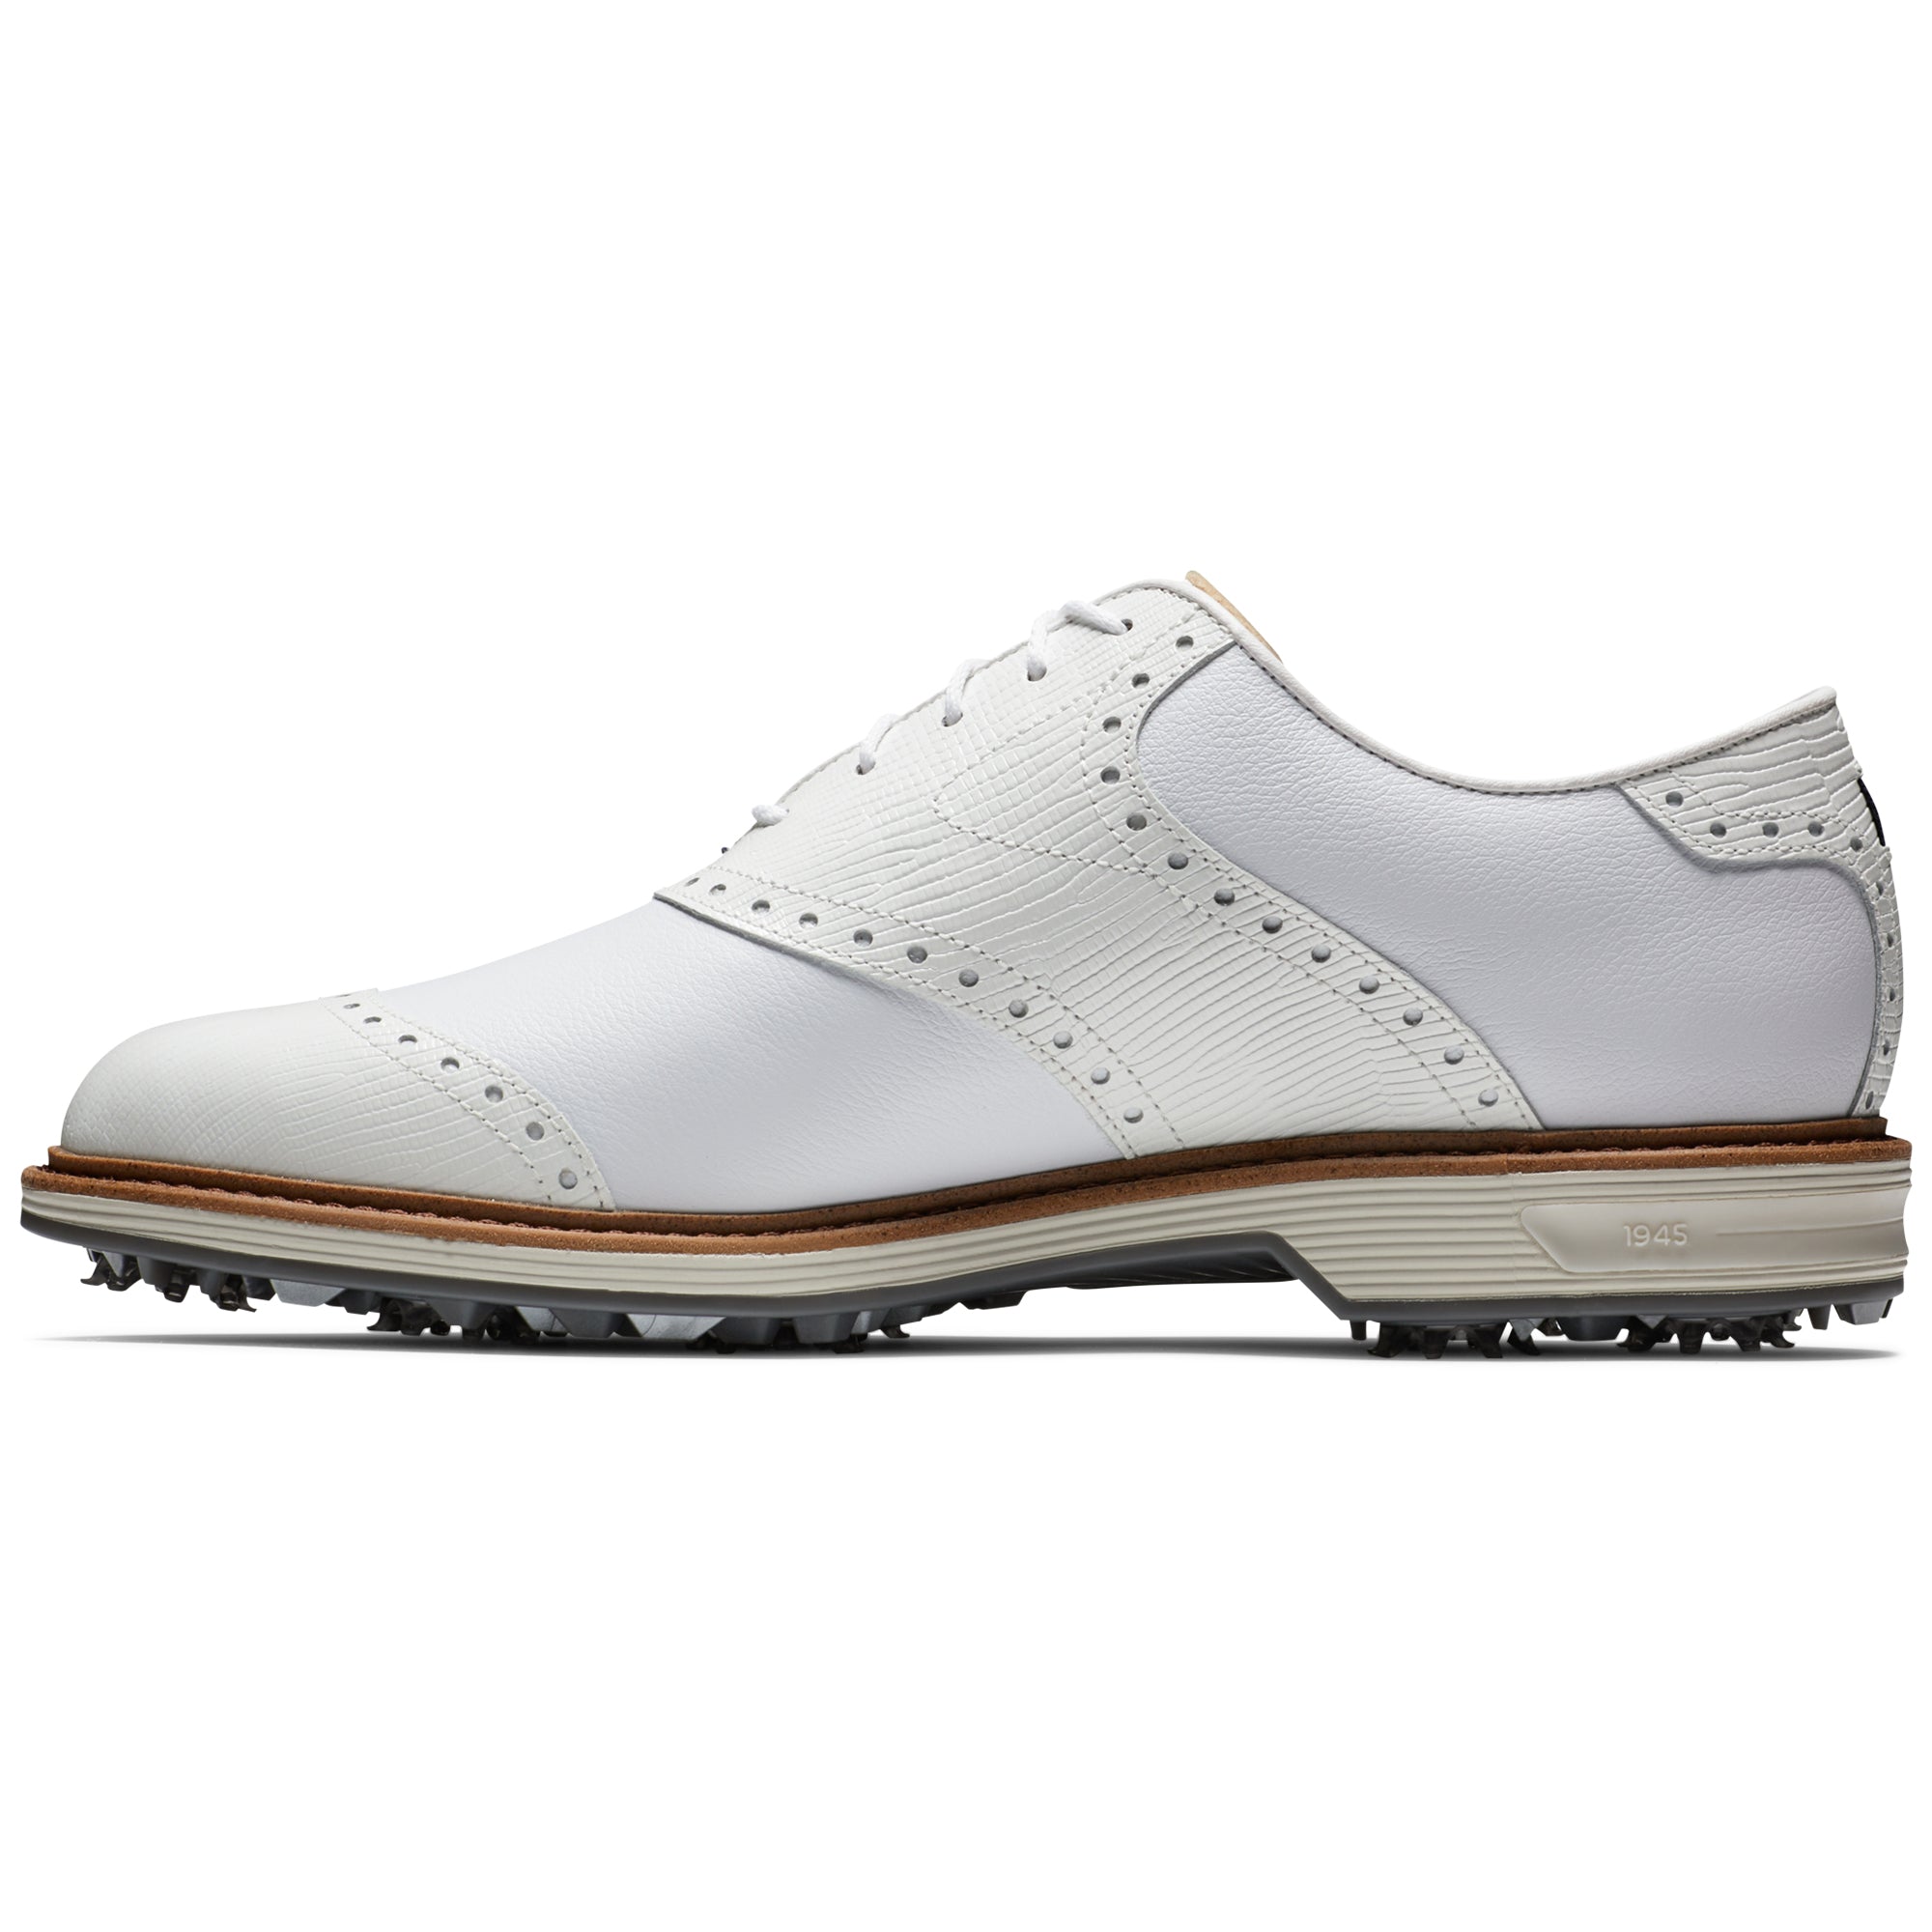 footjoy-premiere-series-wilcox-golf-shoes-54322-white